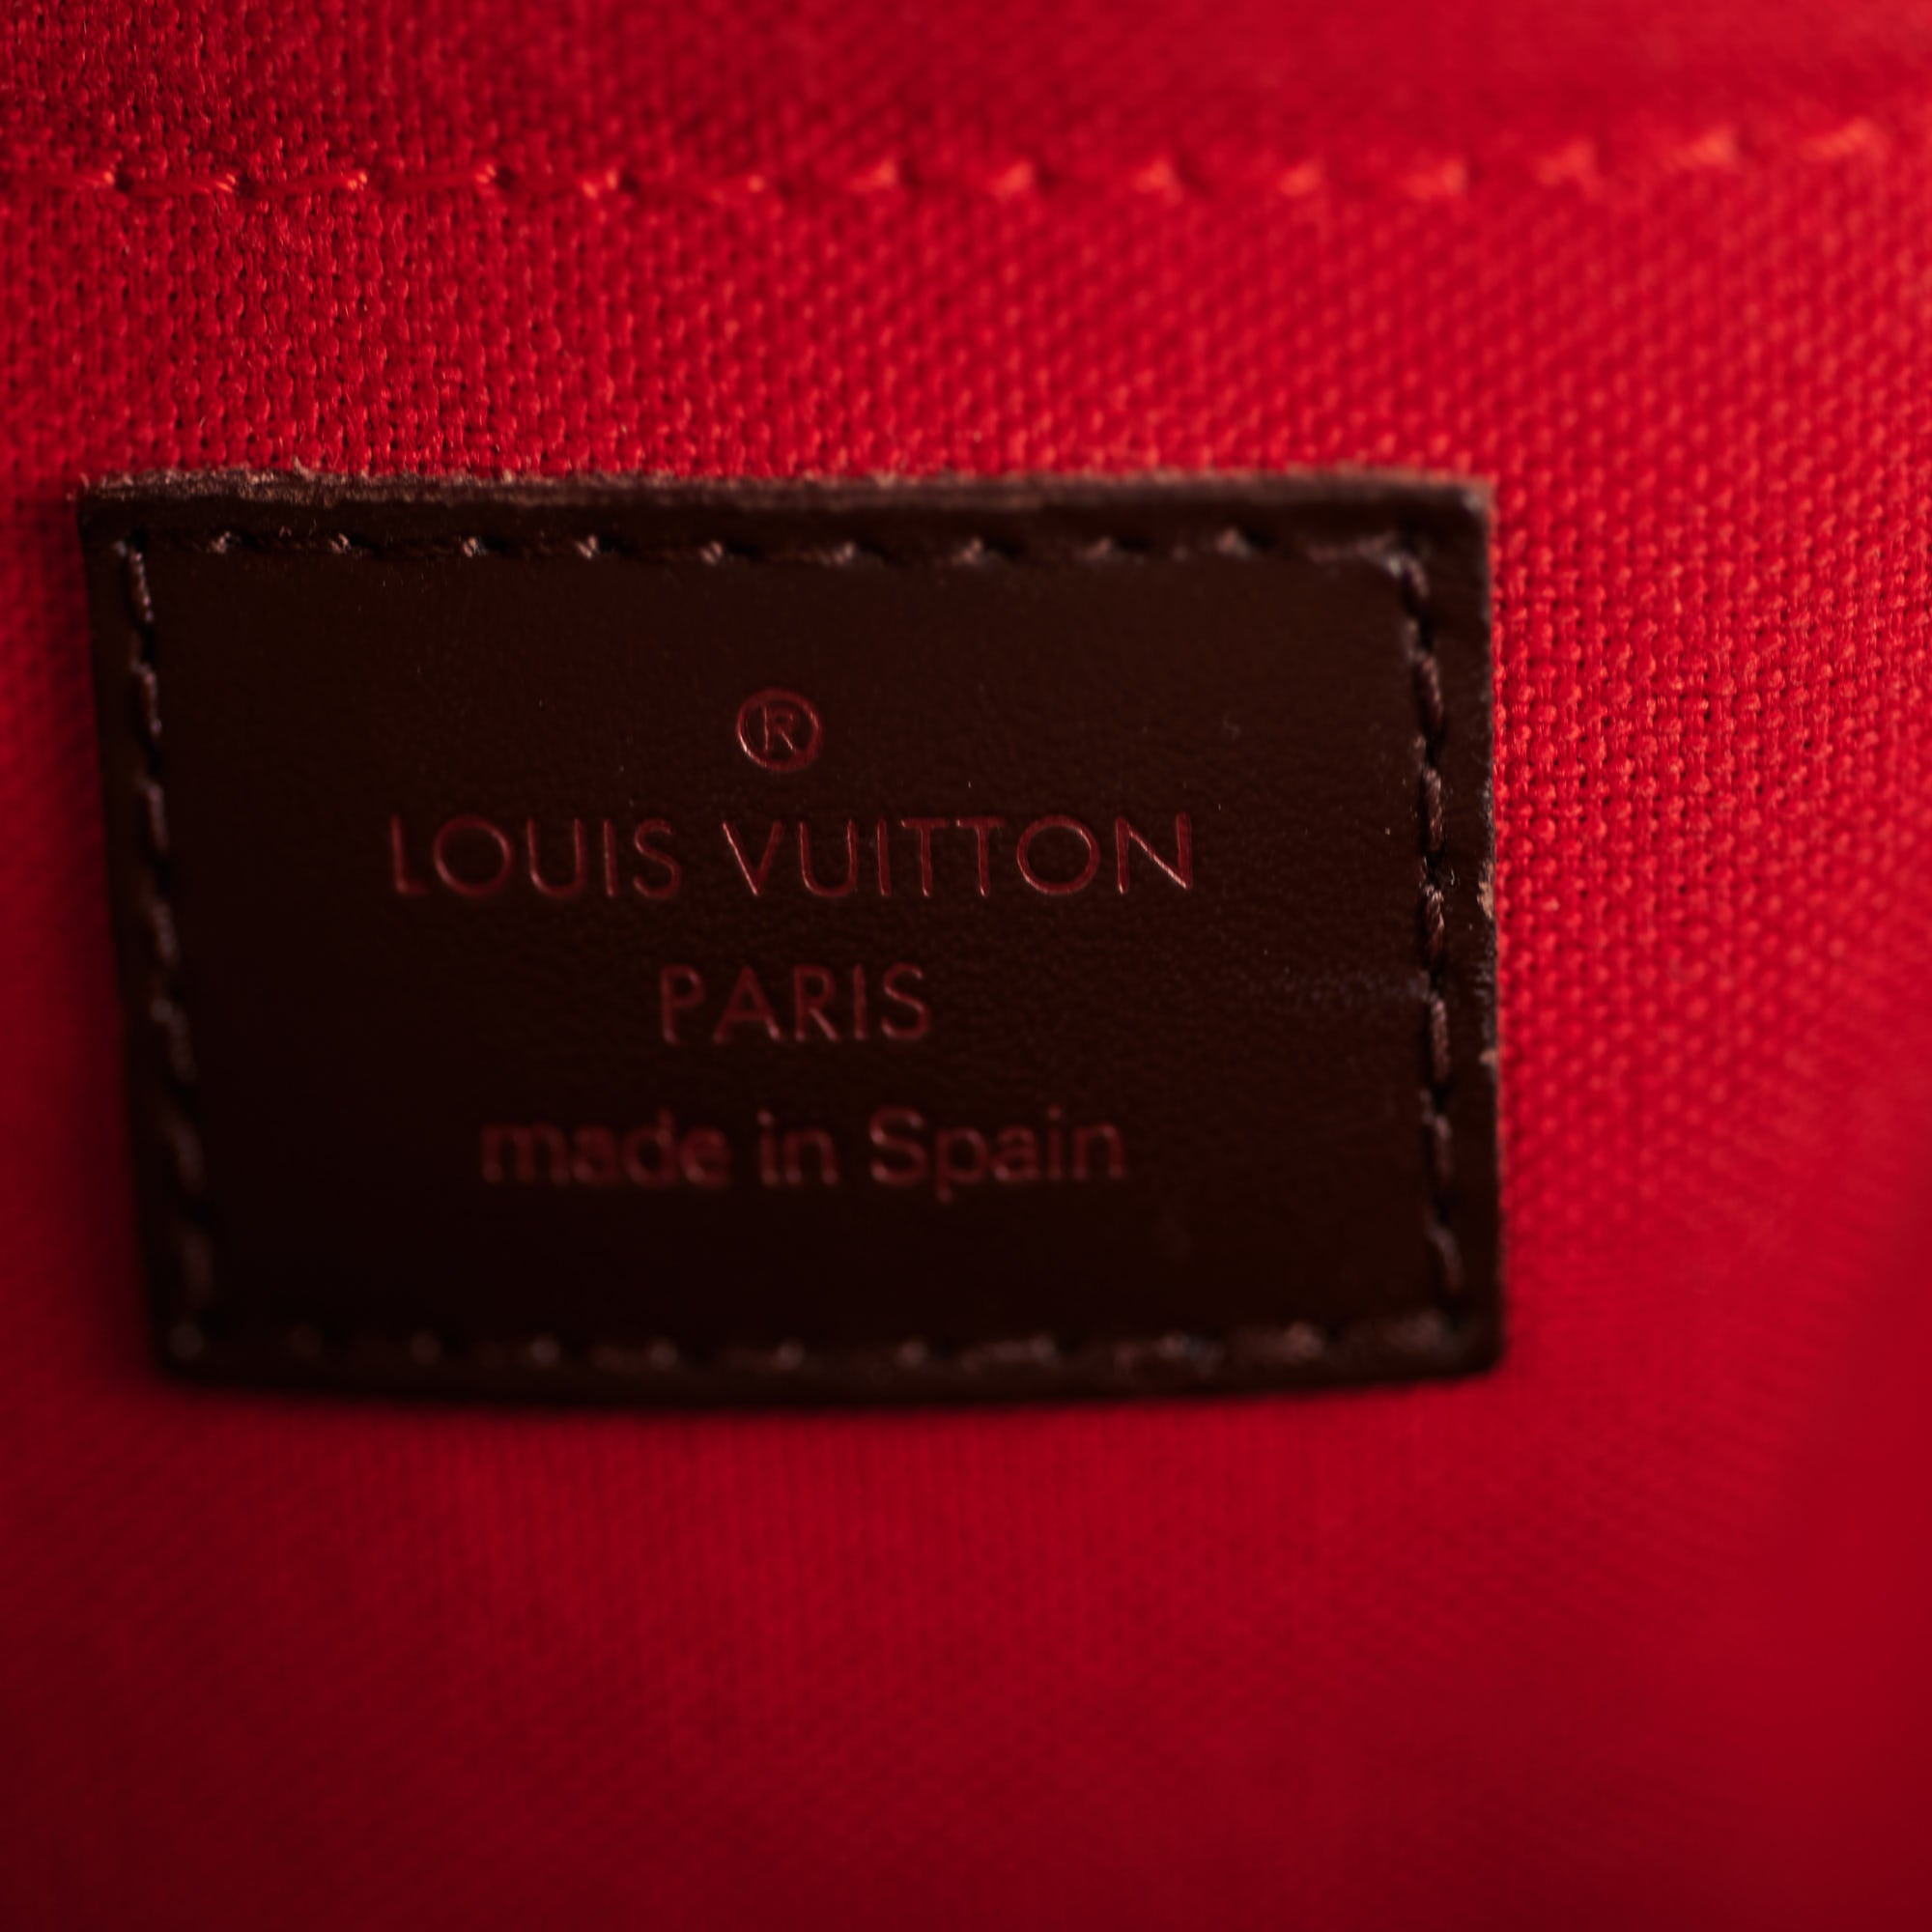 Louis Vuitton Authentic Ribera MM Damier Ebene - $883 - From Uta